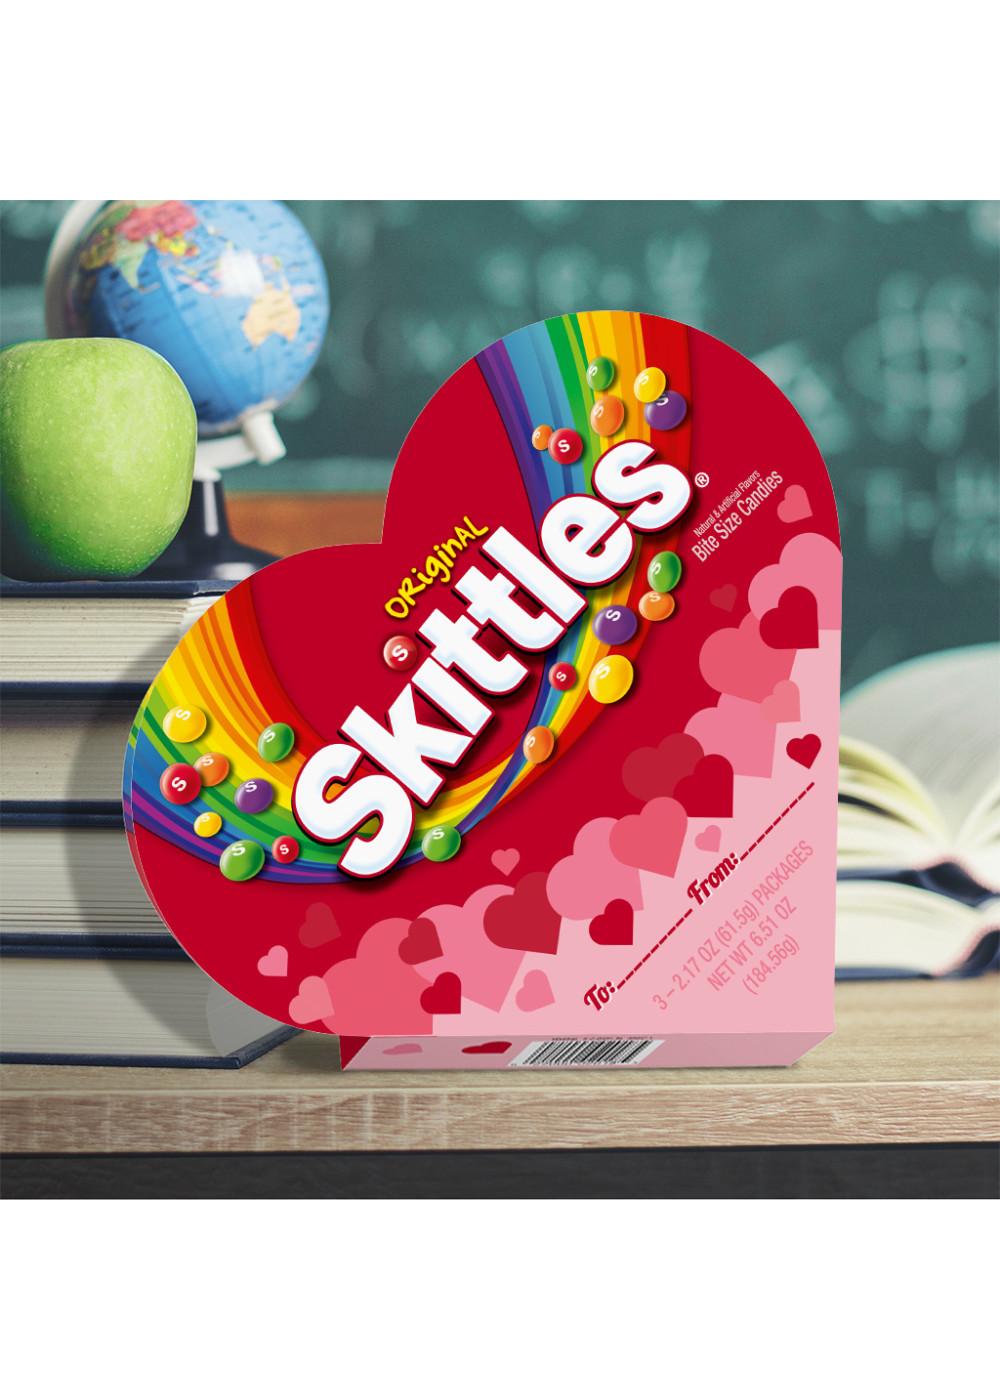 Skittles Original Candy Valentine's Heart Gift Box; image 7 of 7